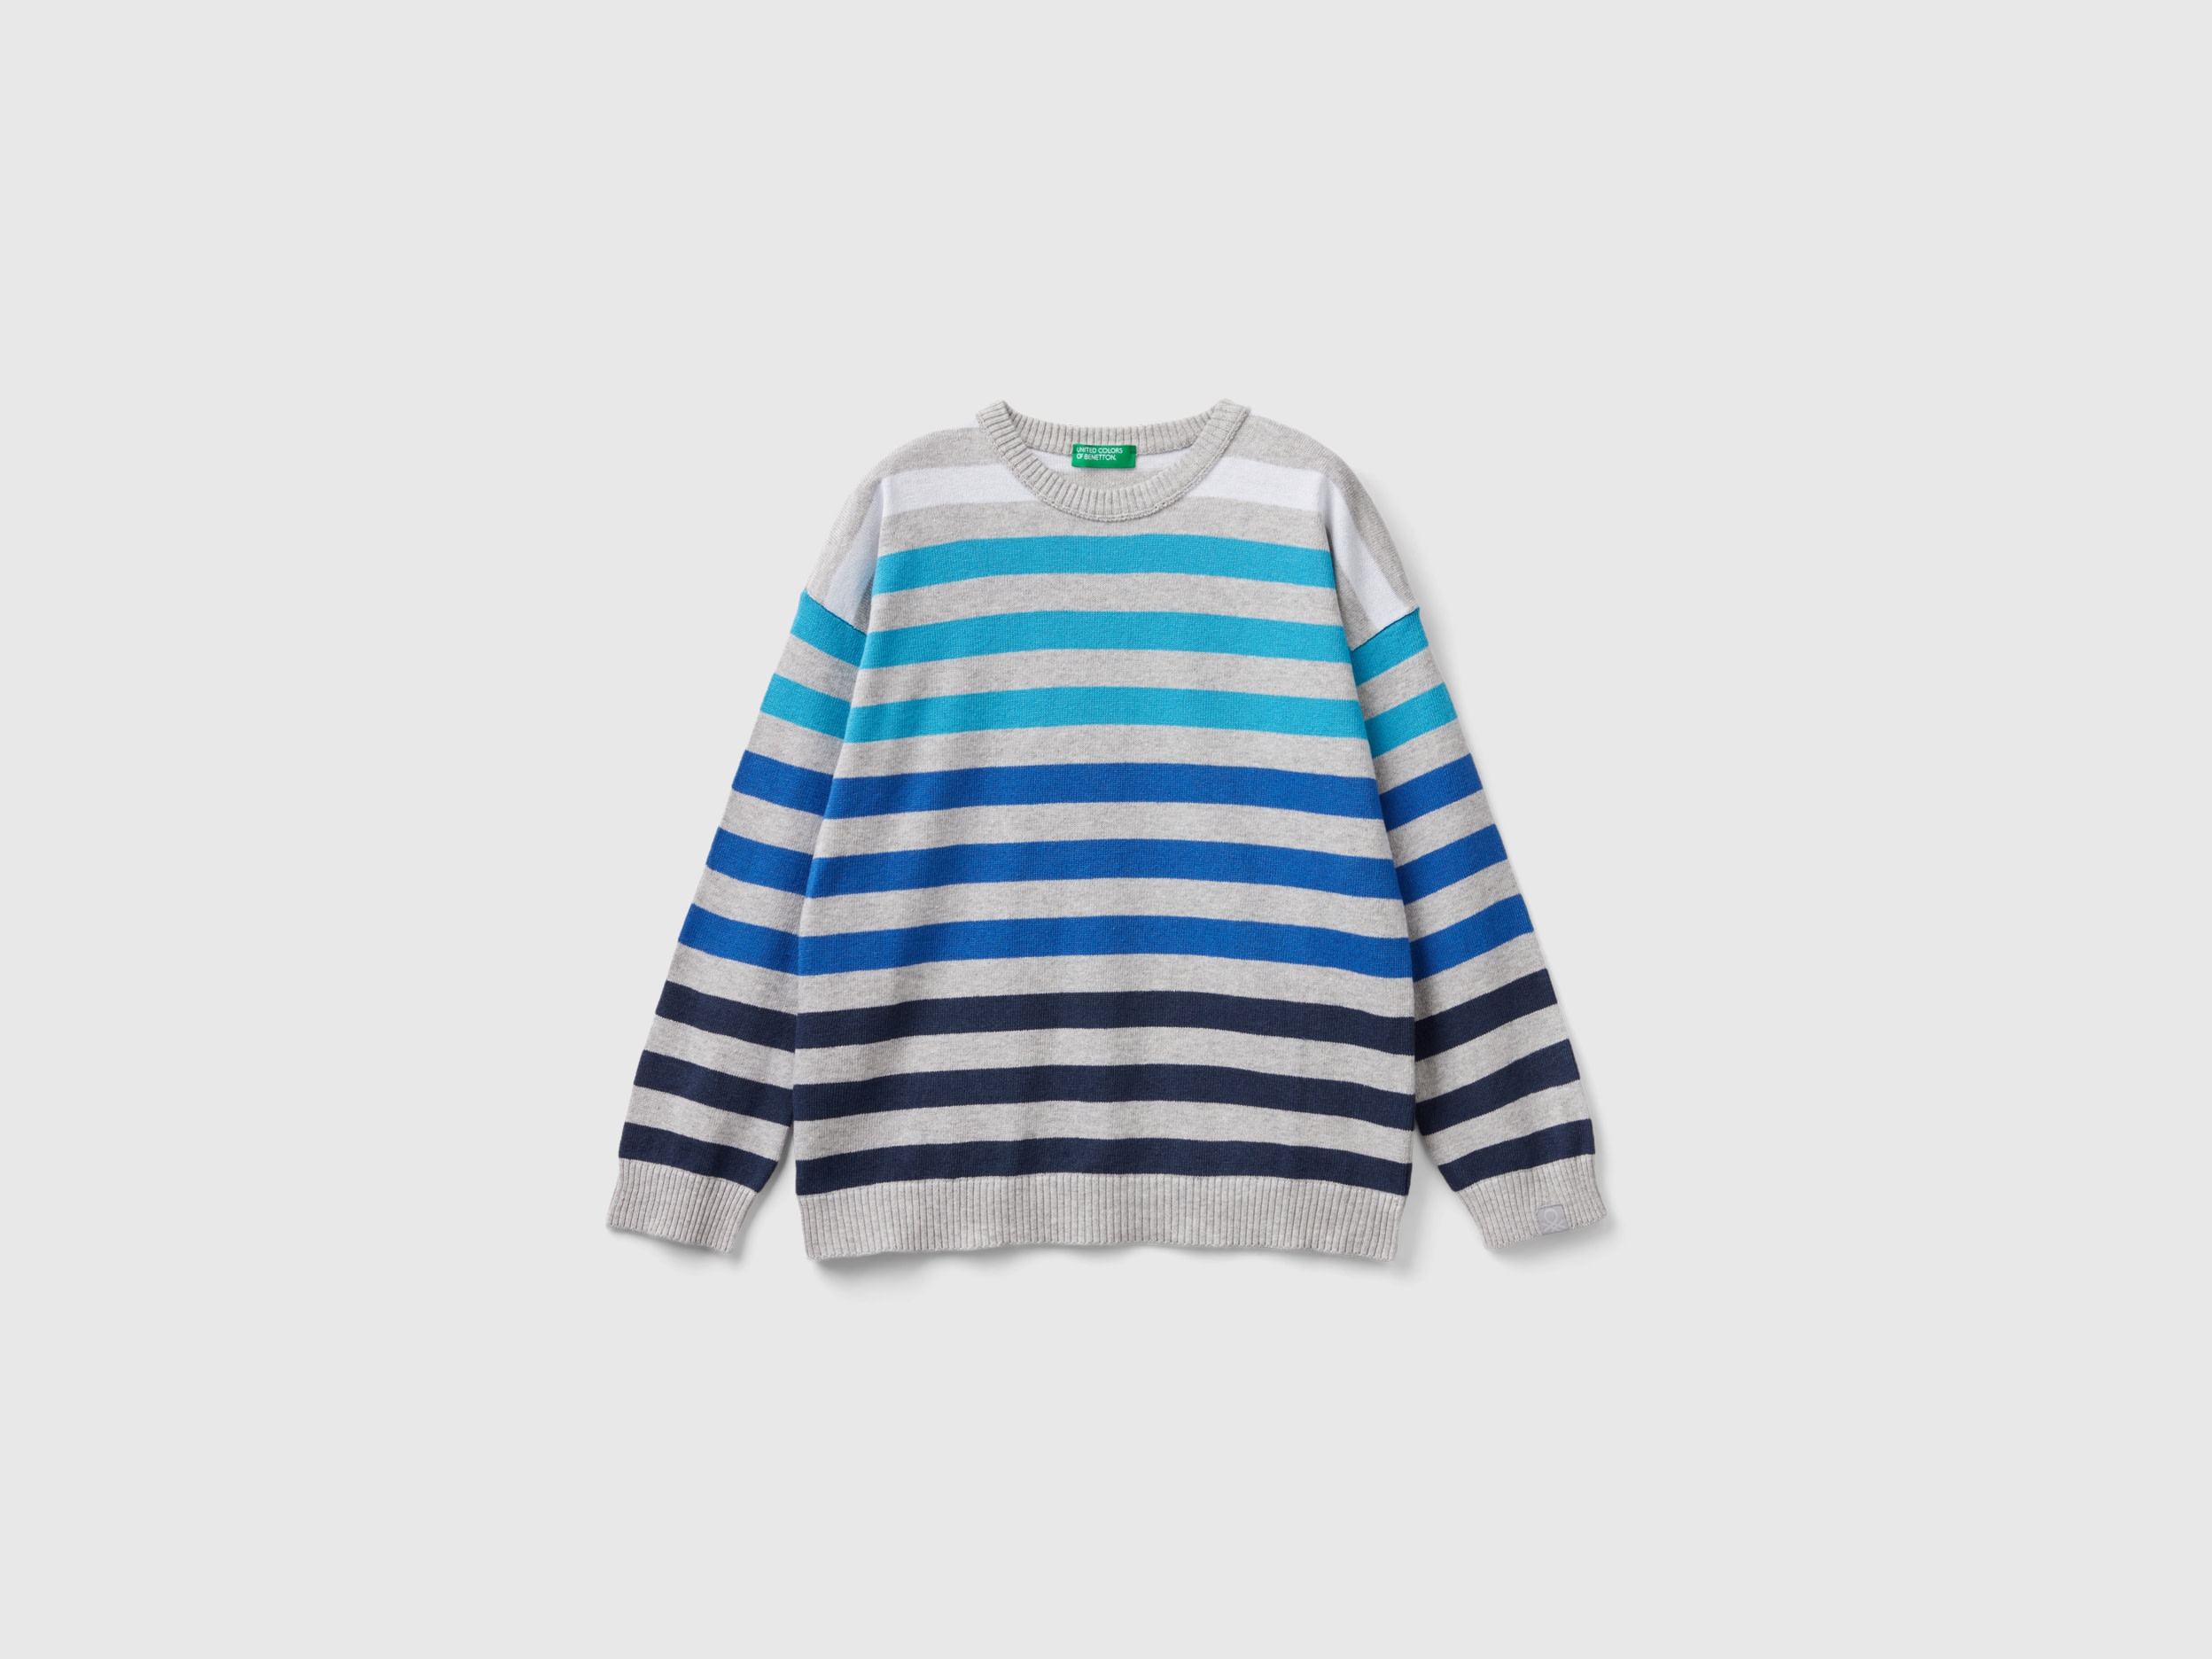 Image of Benetton, Striped Sweater, size 2XL, Light Gray, Kids